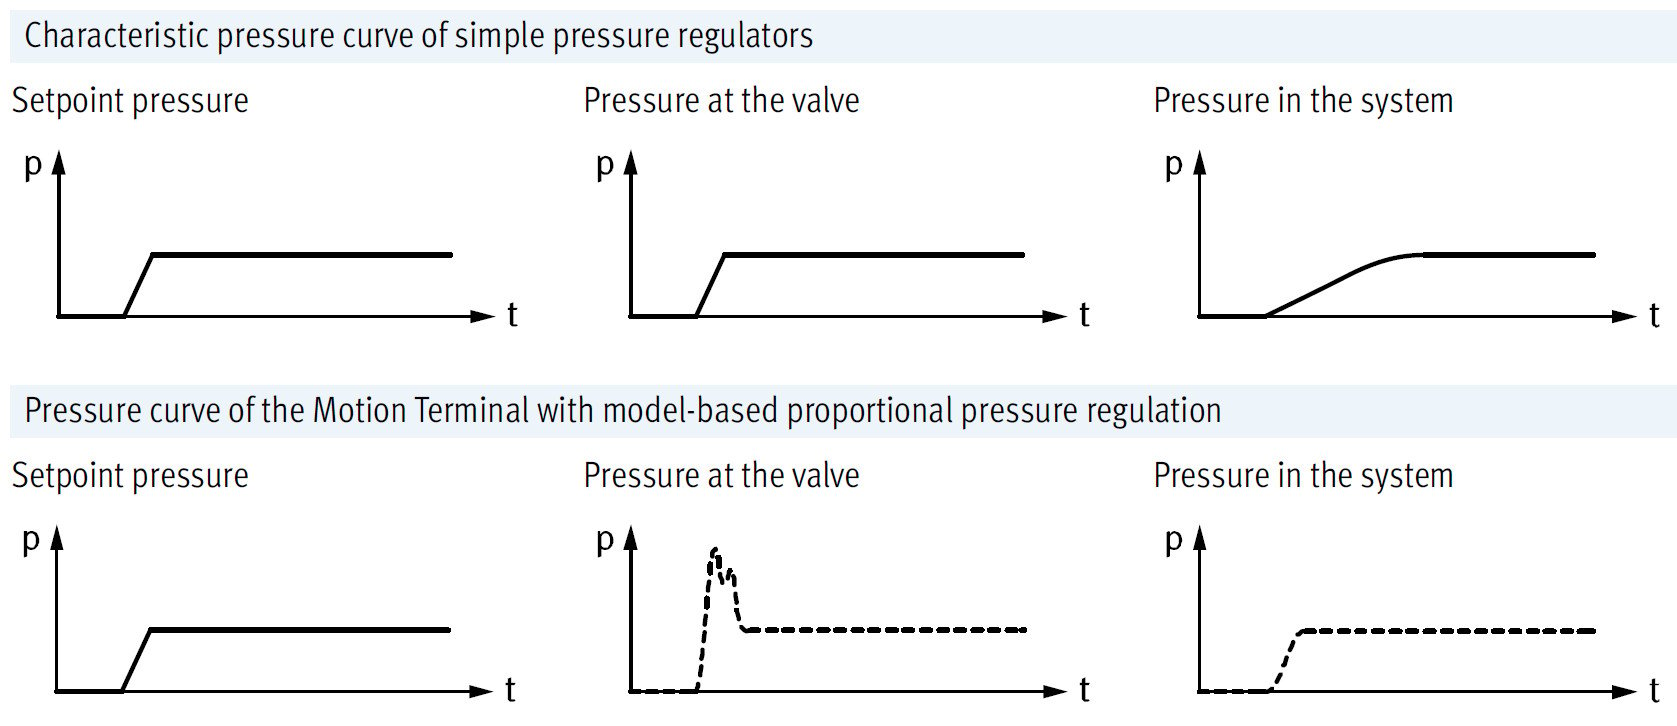 Motion Terminal’s intelligent model-based proportional pressure regulation app brings system pressure to the setpoint faster than conventional pressure regulators. (Click image to enlarge.) Source: Festo